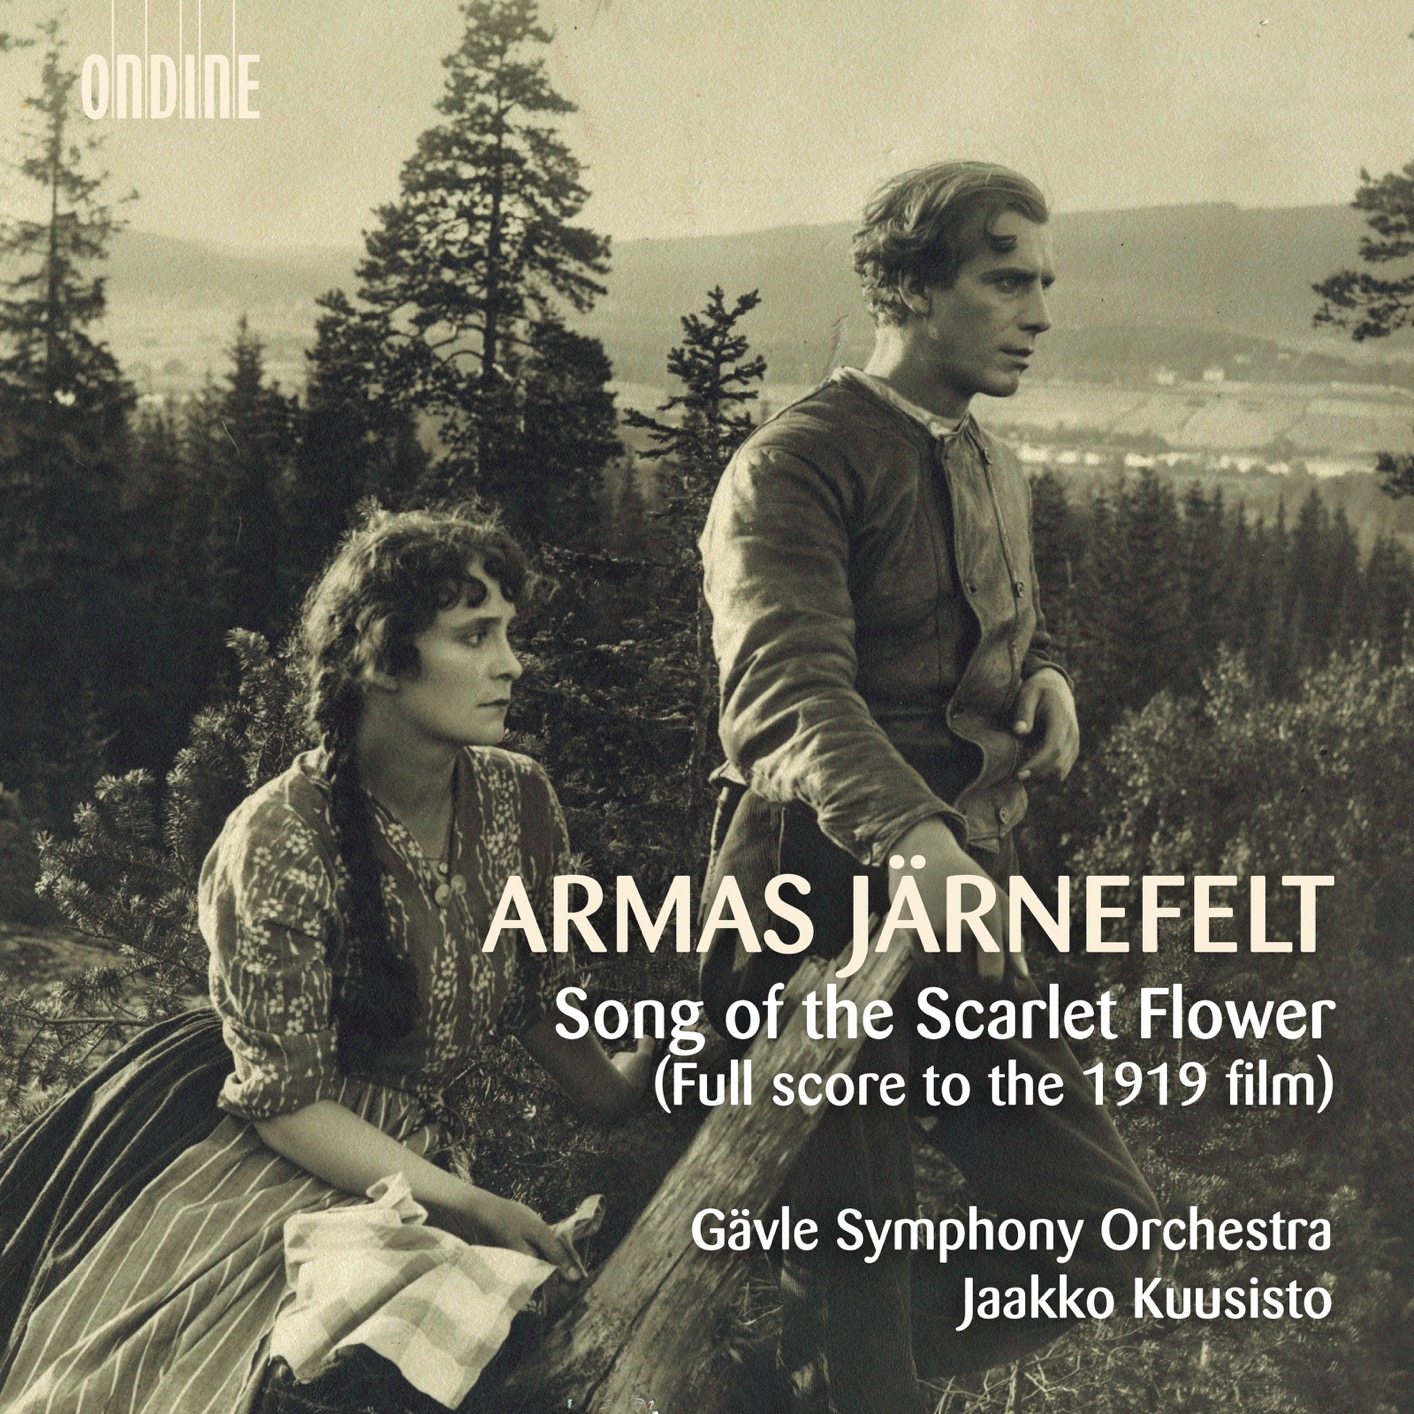 Gavle Symphony Orchestra & Jaakko Kuusisto - Song of the Scarlet Flower (Full Score to the 1919 Film) (2019) [FLAC 24bit/96kHz]